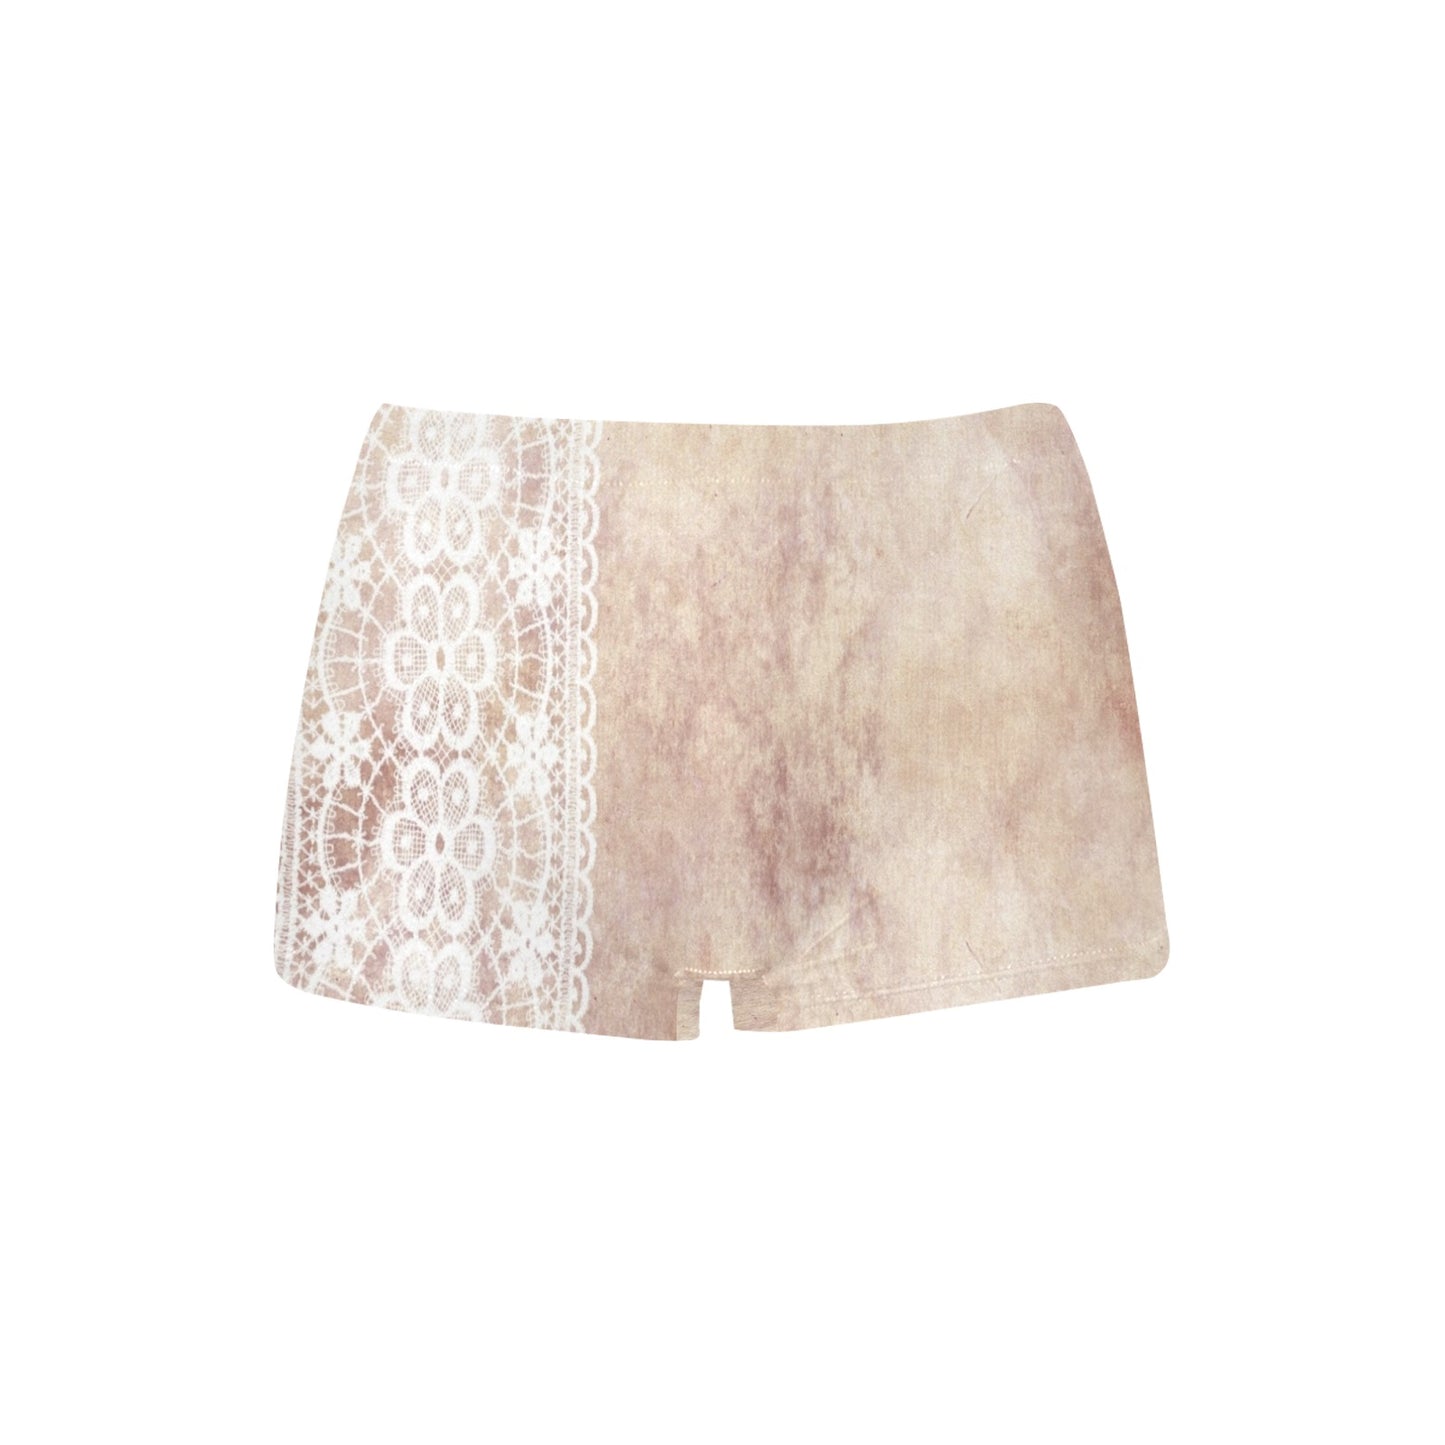 Printed Lace Boyshorts, daisy dukes, pum pum shorts, shortie shorts , design 35